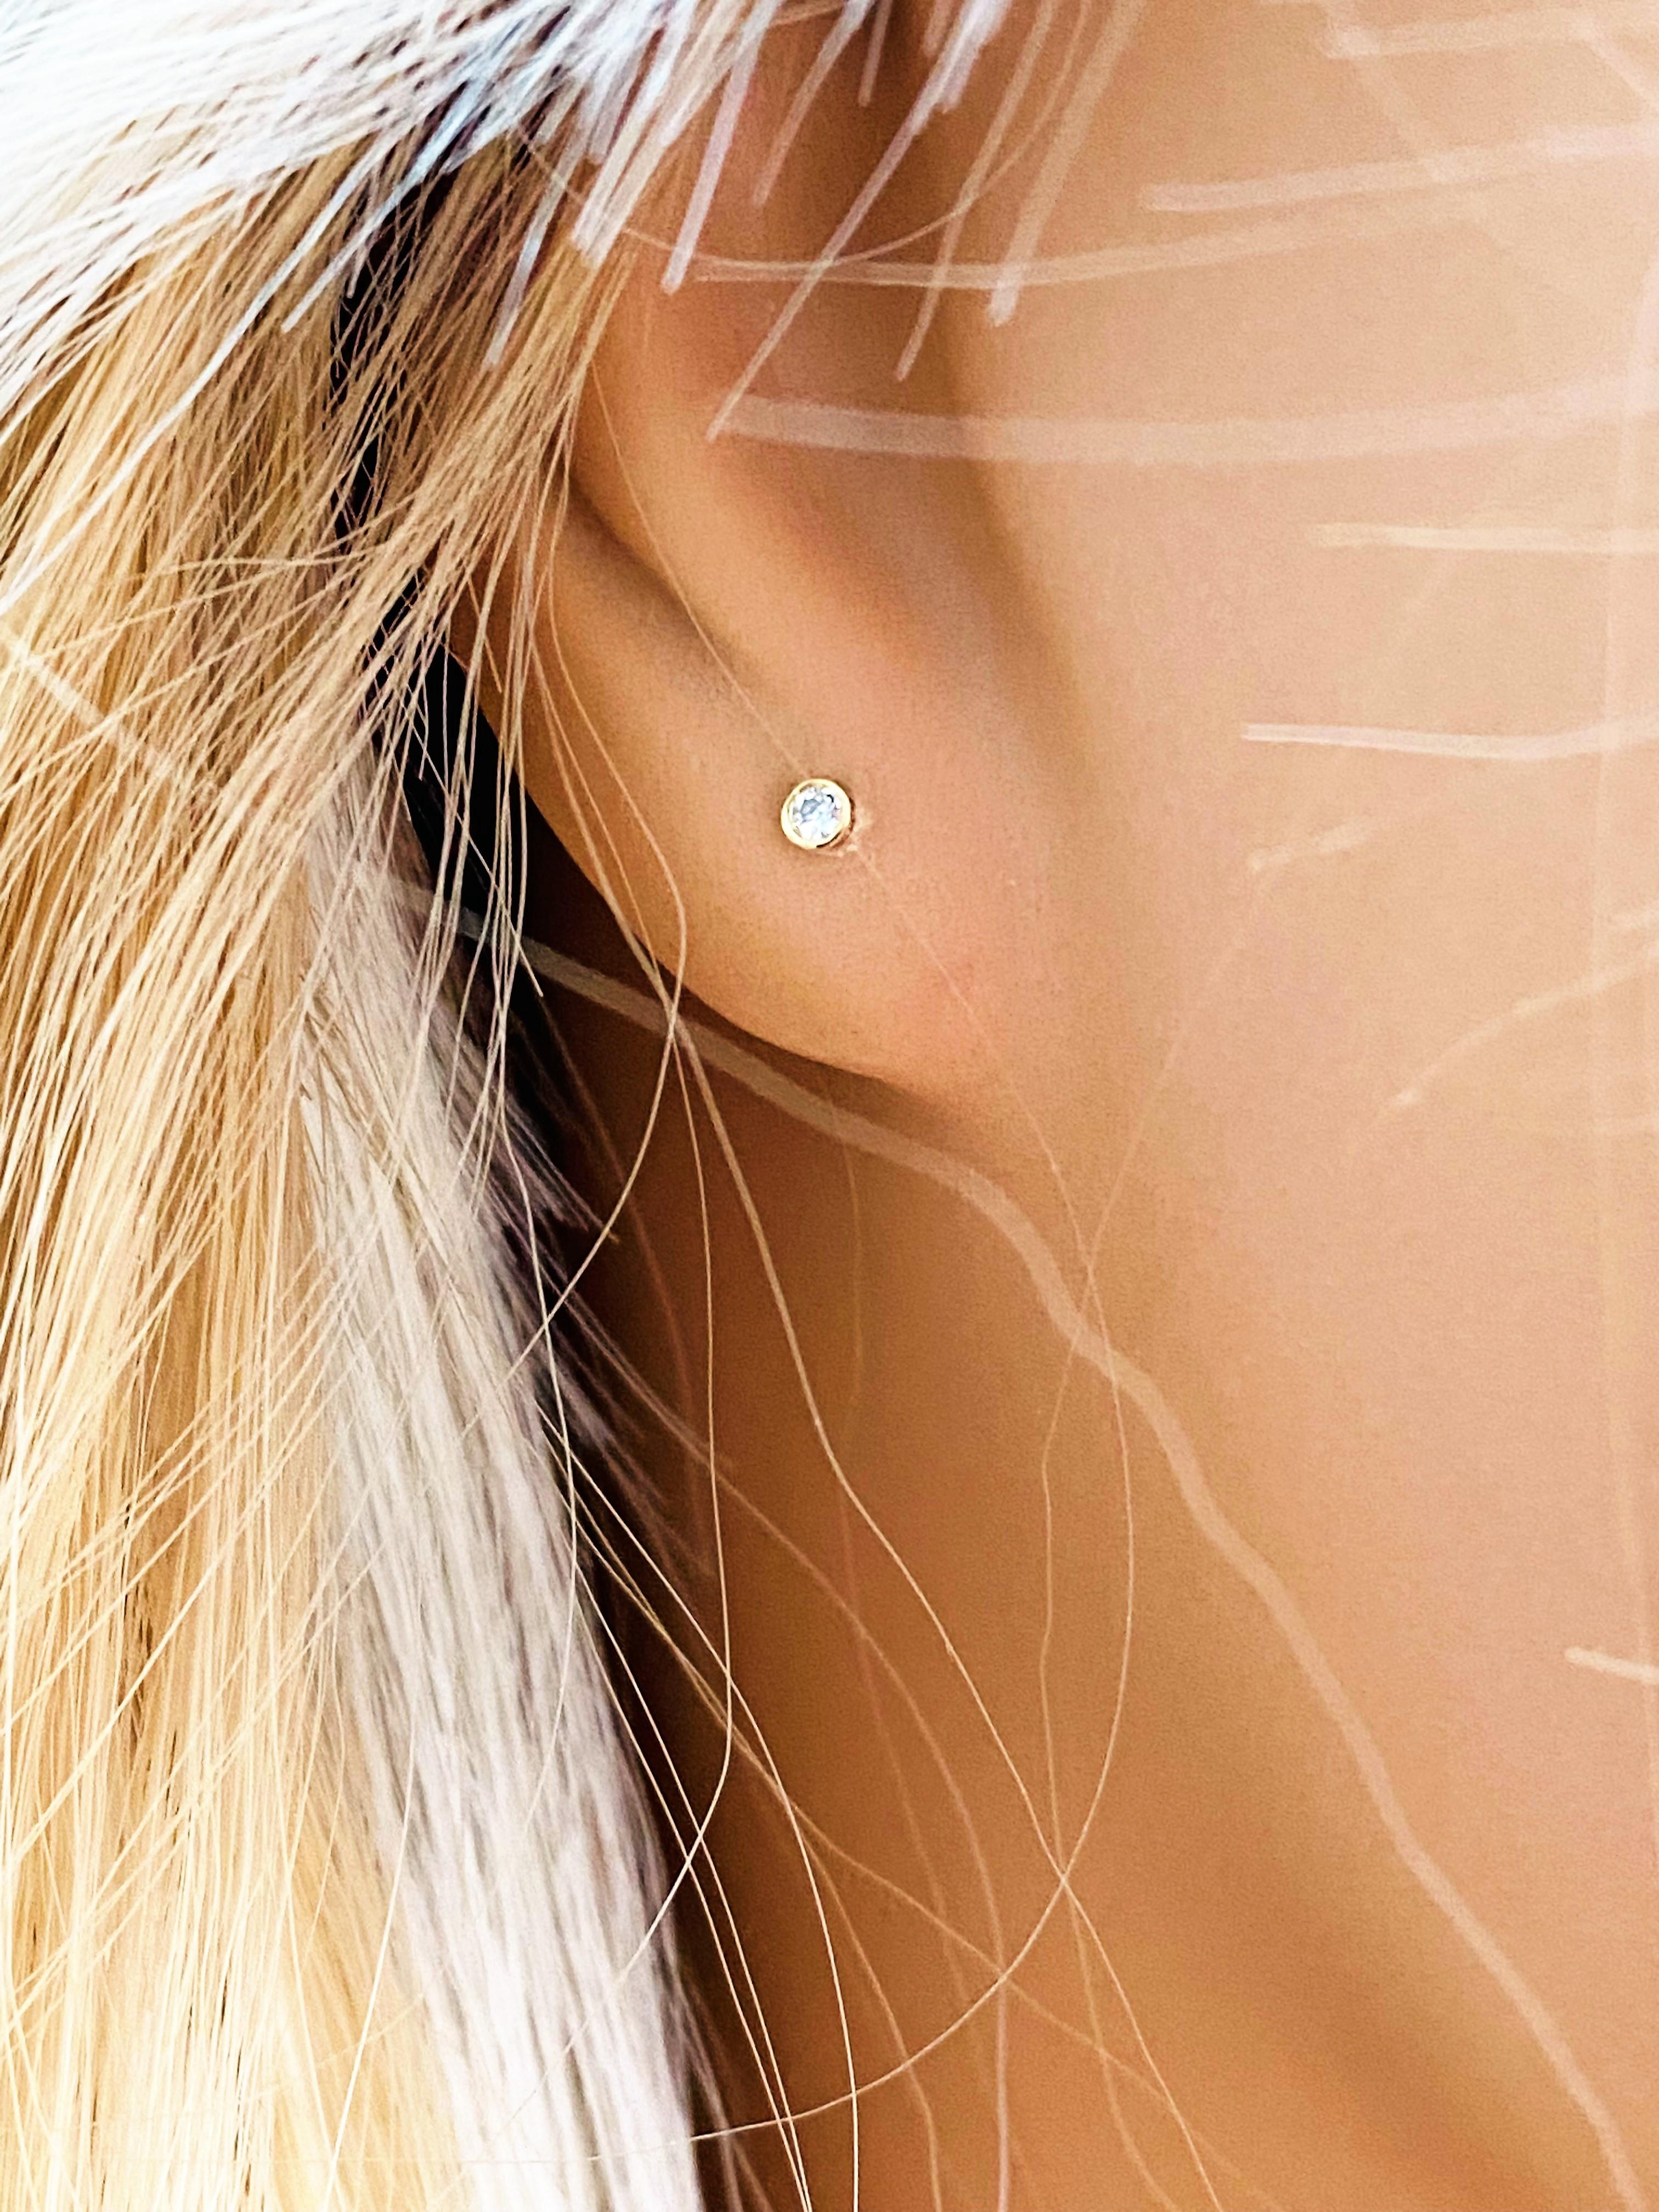 Contemporary Tiny Fourteen Karat White Gold Diamond Stud Earrings for Third Hole